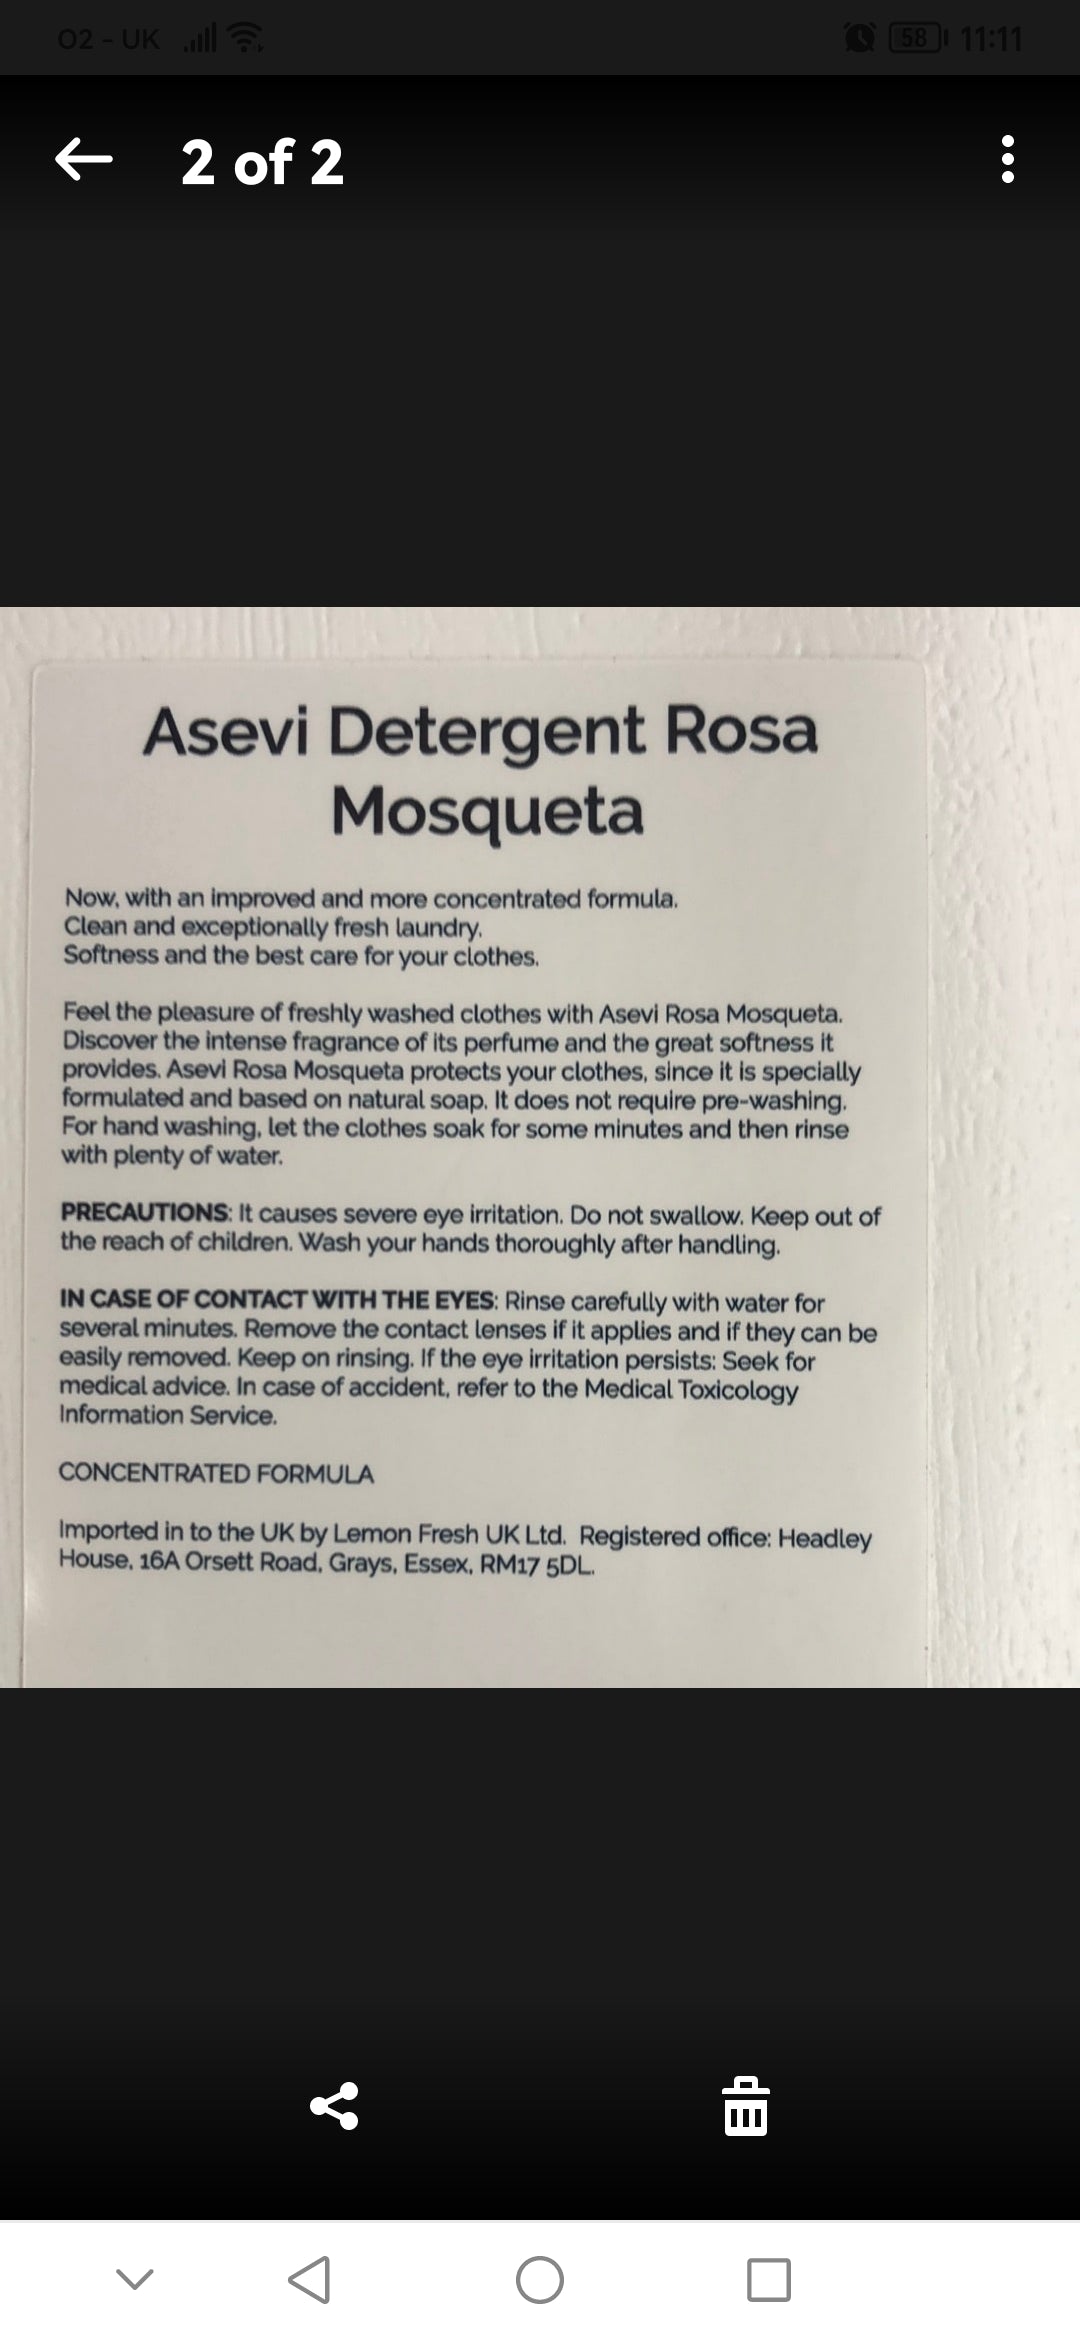 Asevi Rosa Mosqueta Spanish detergent 40 wash